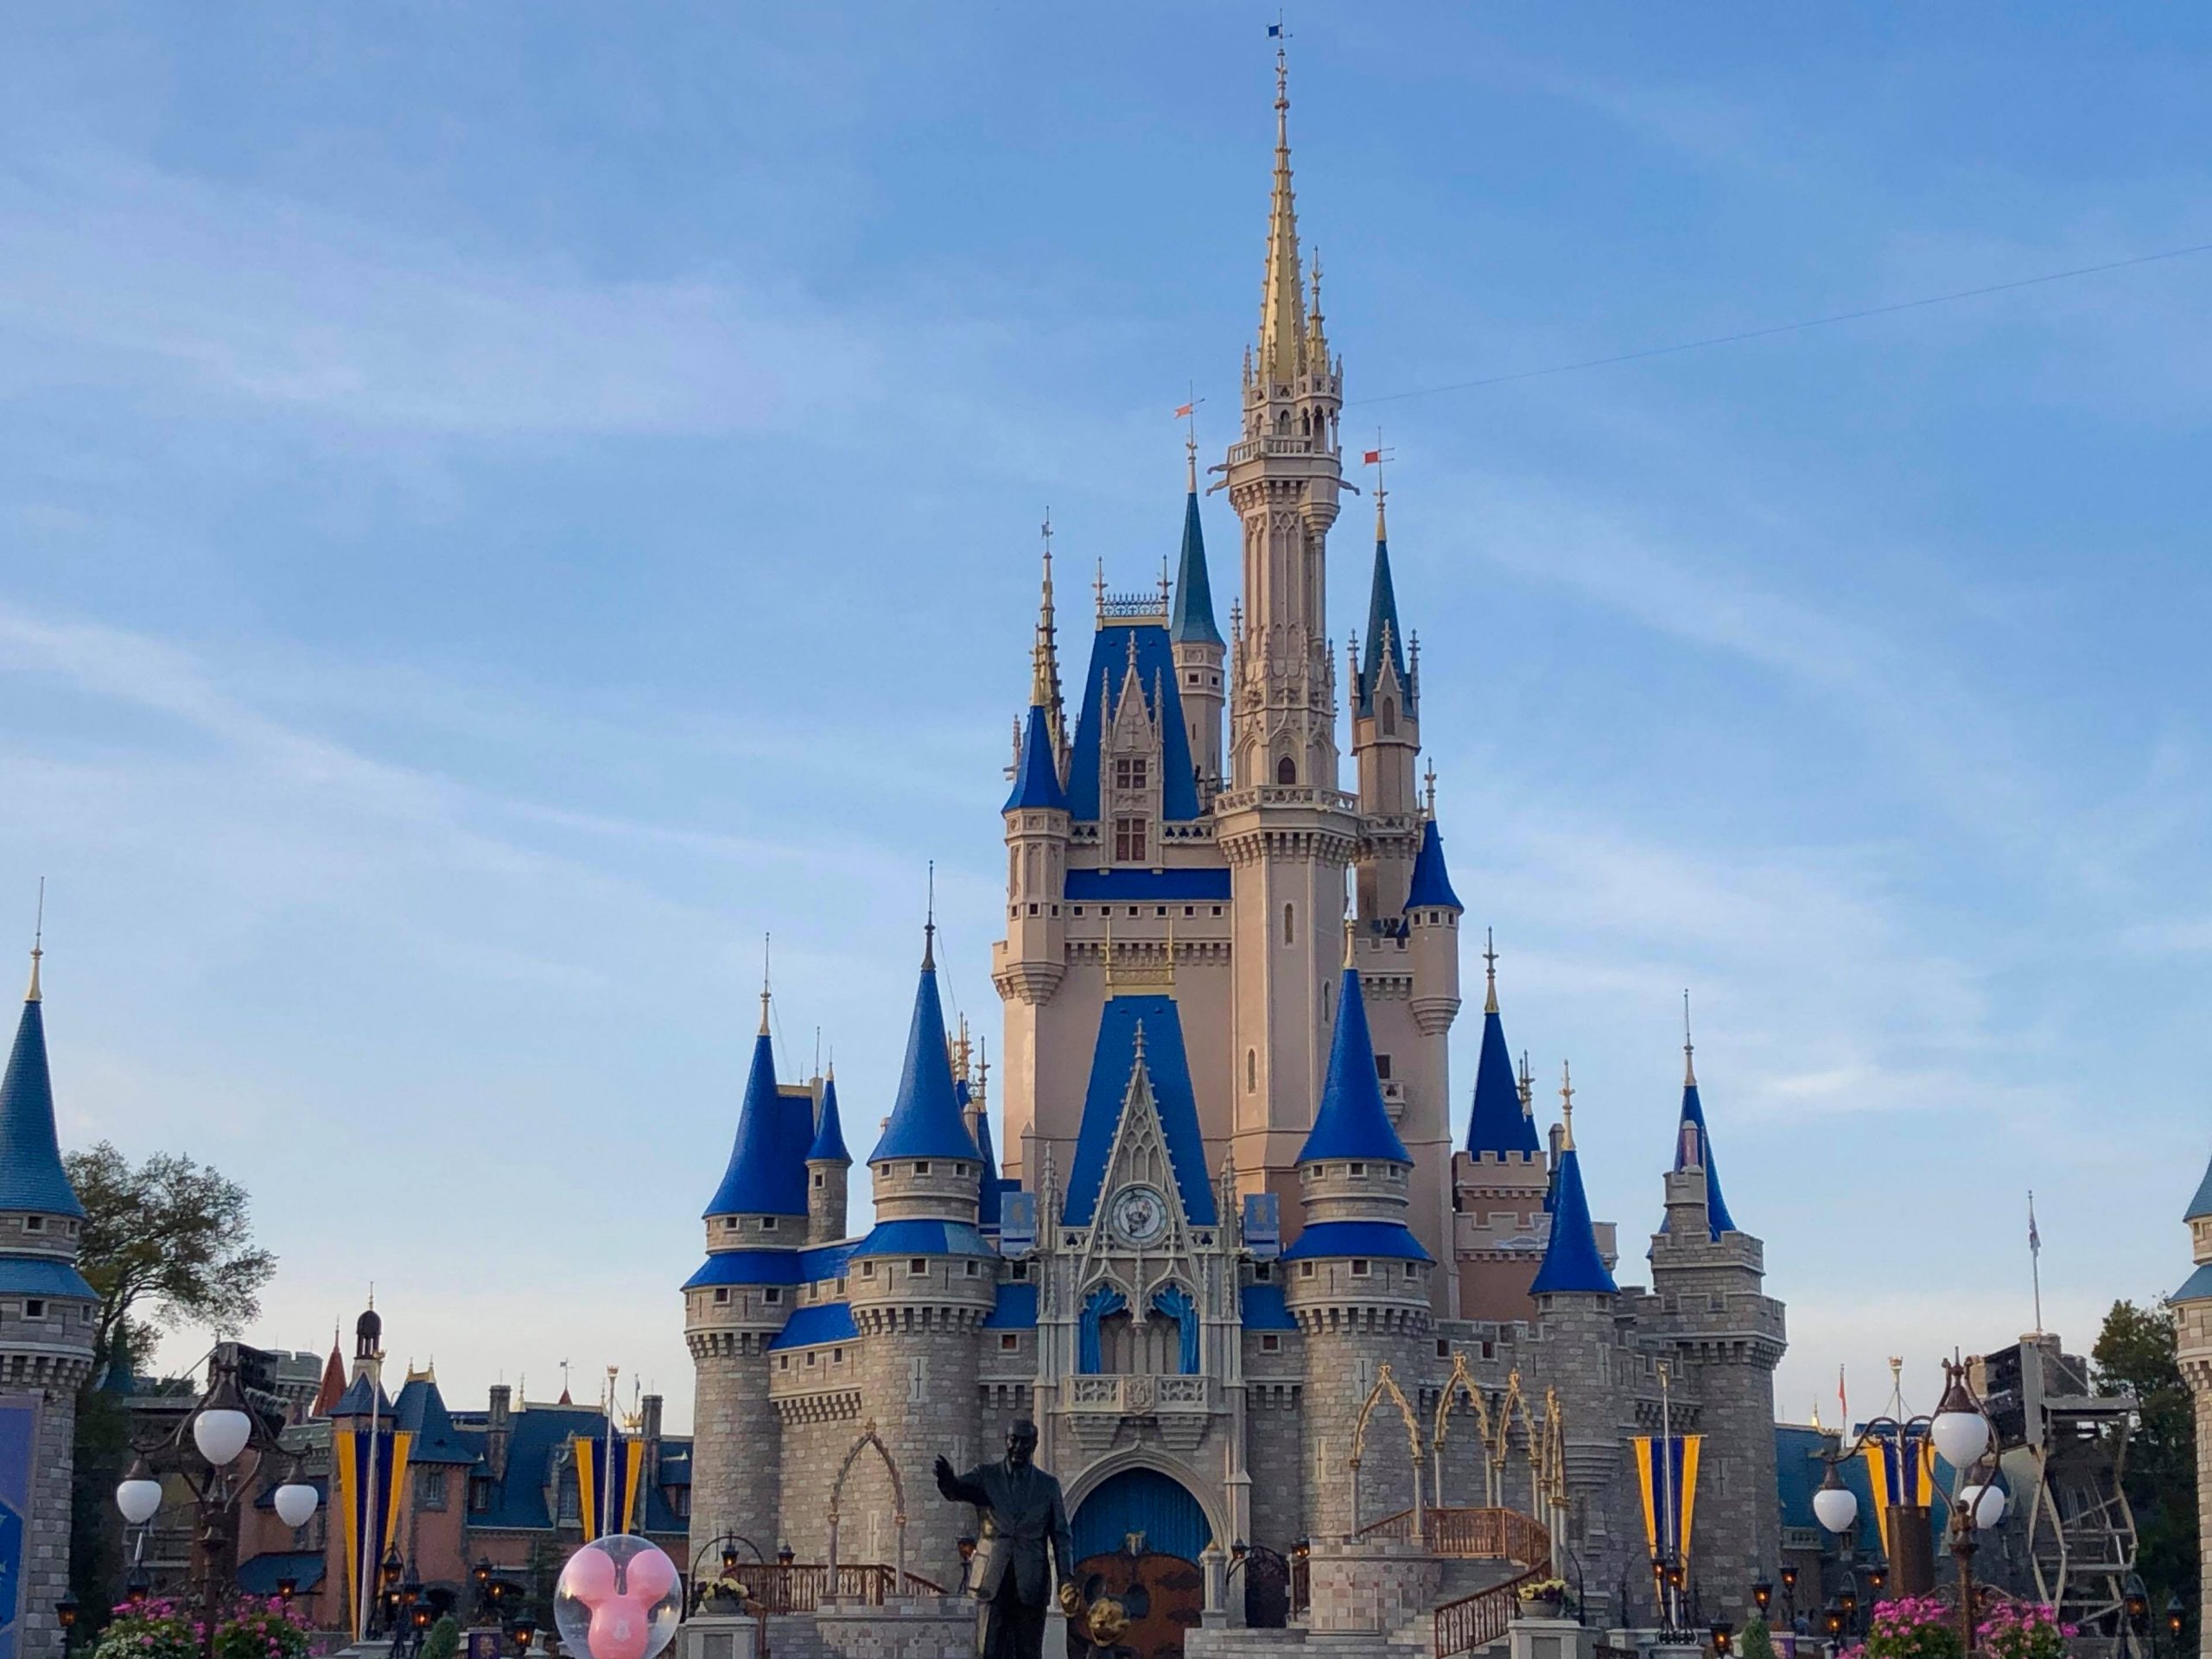 Update on Cinderella Castle’s Magical Makeover